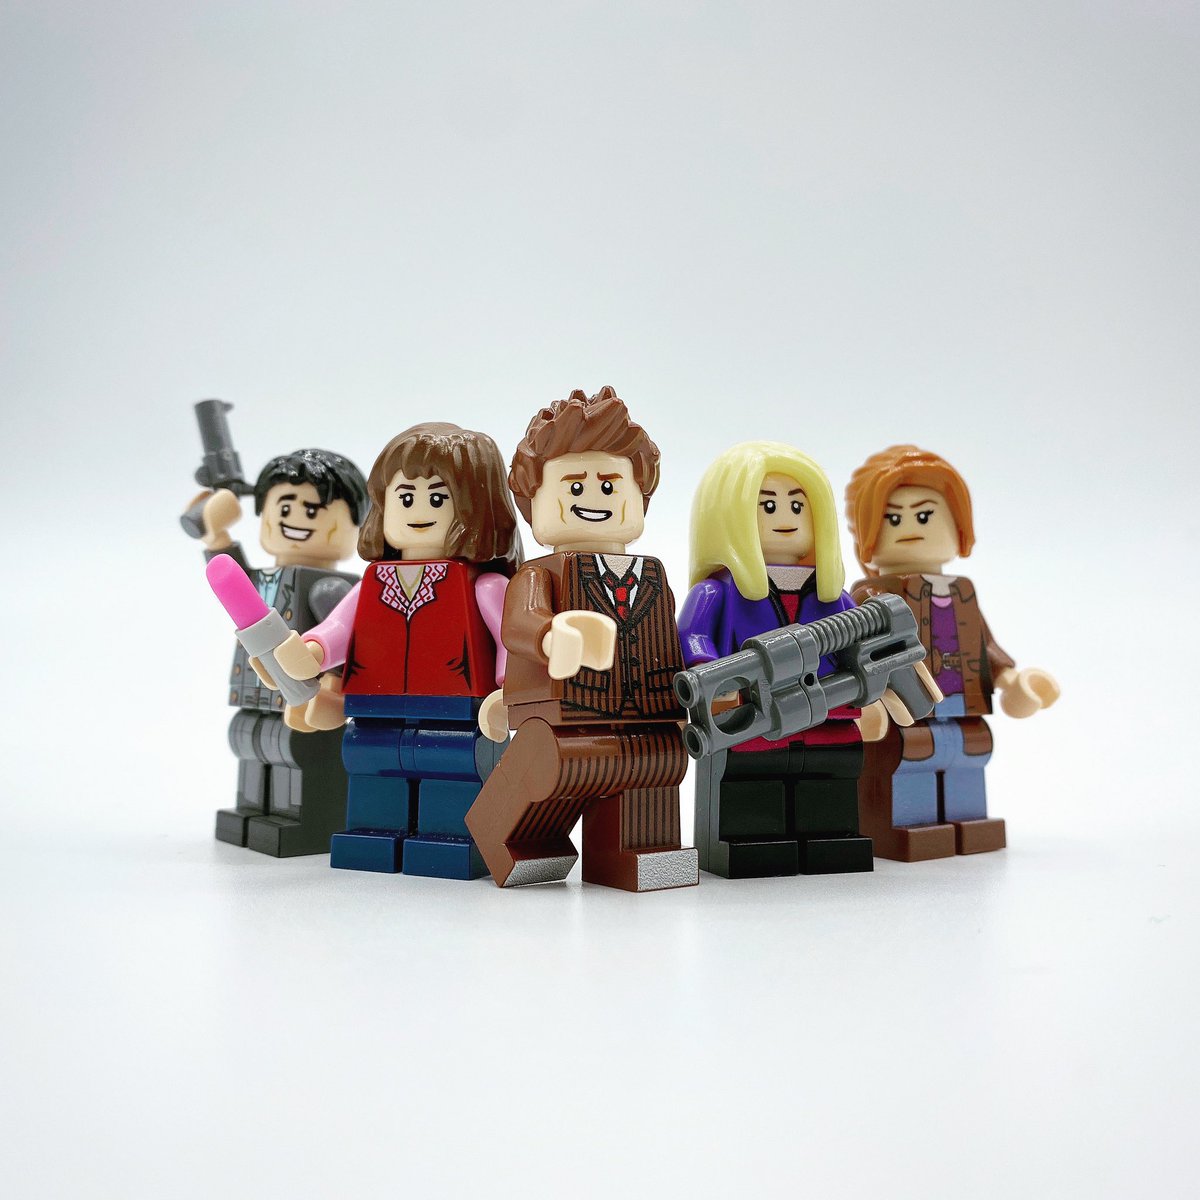 The Children of Time. ✨ #LEGO #DoctorWho #SubwaveNetwork